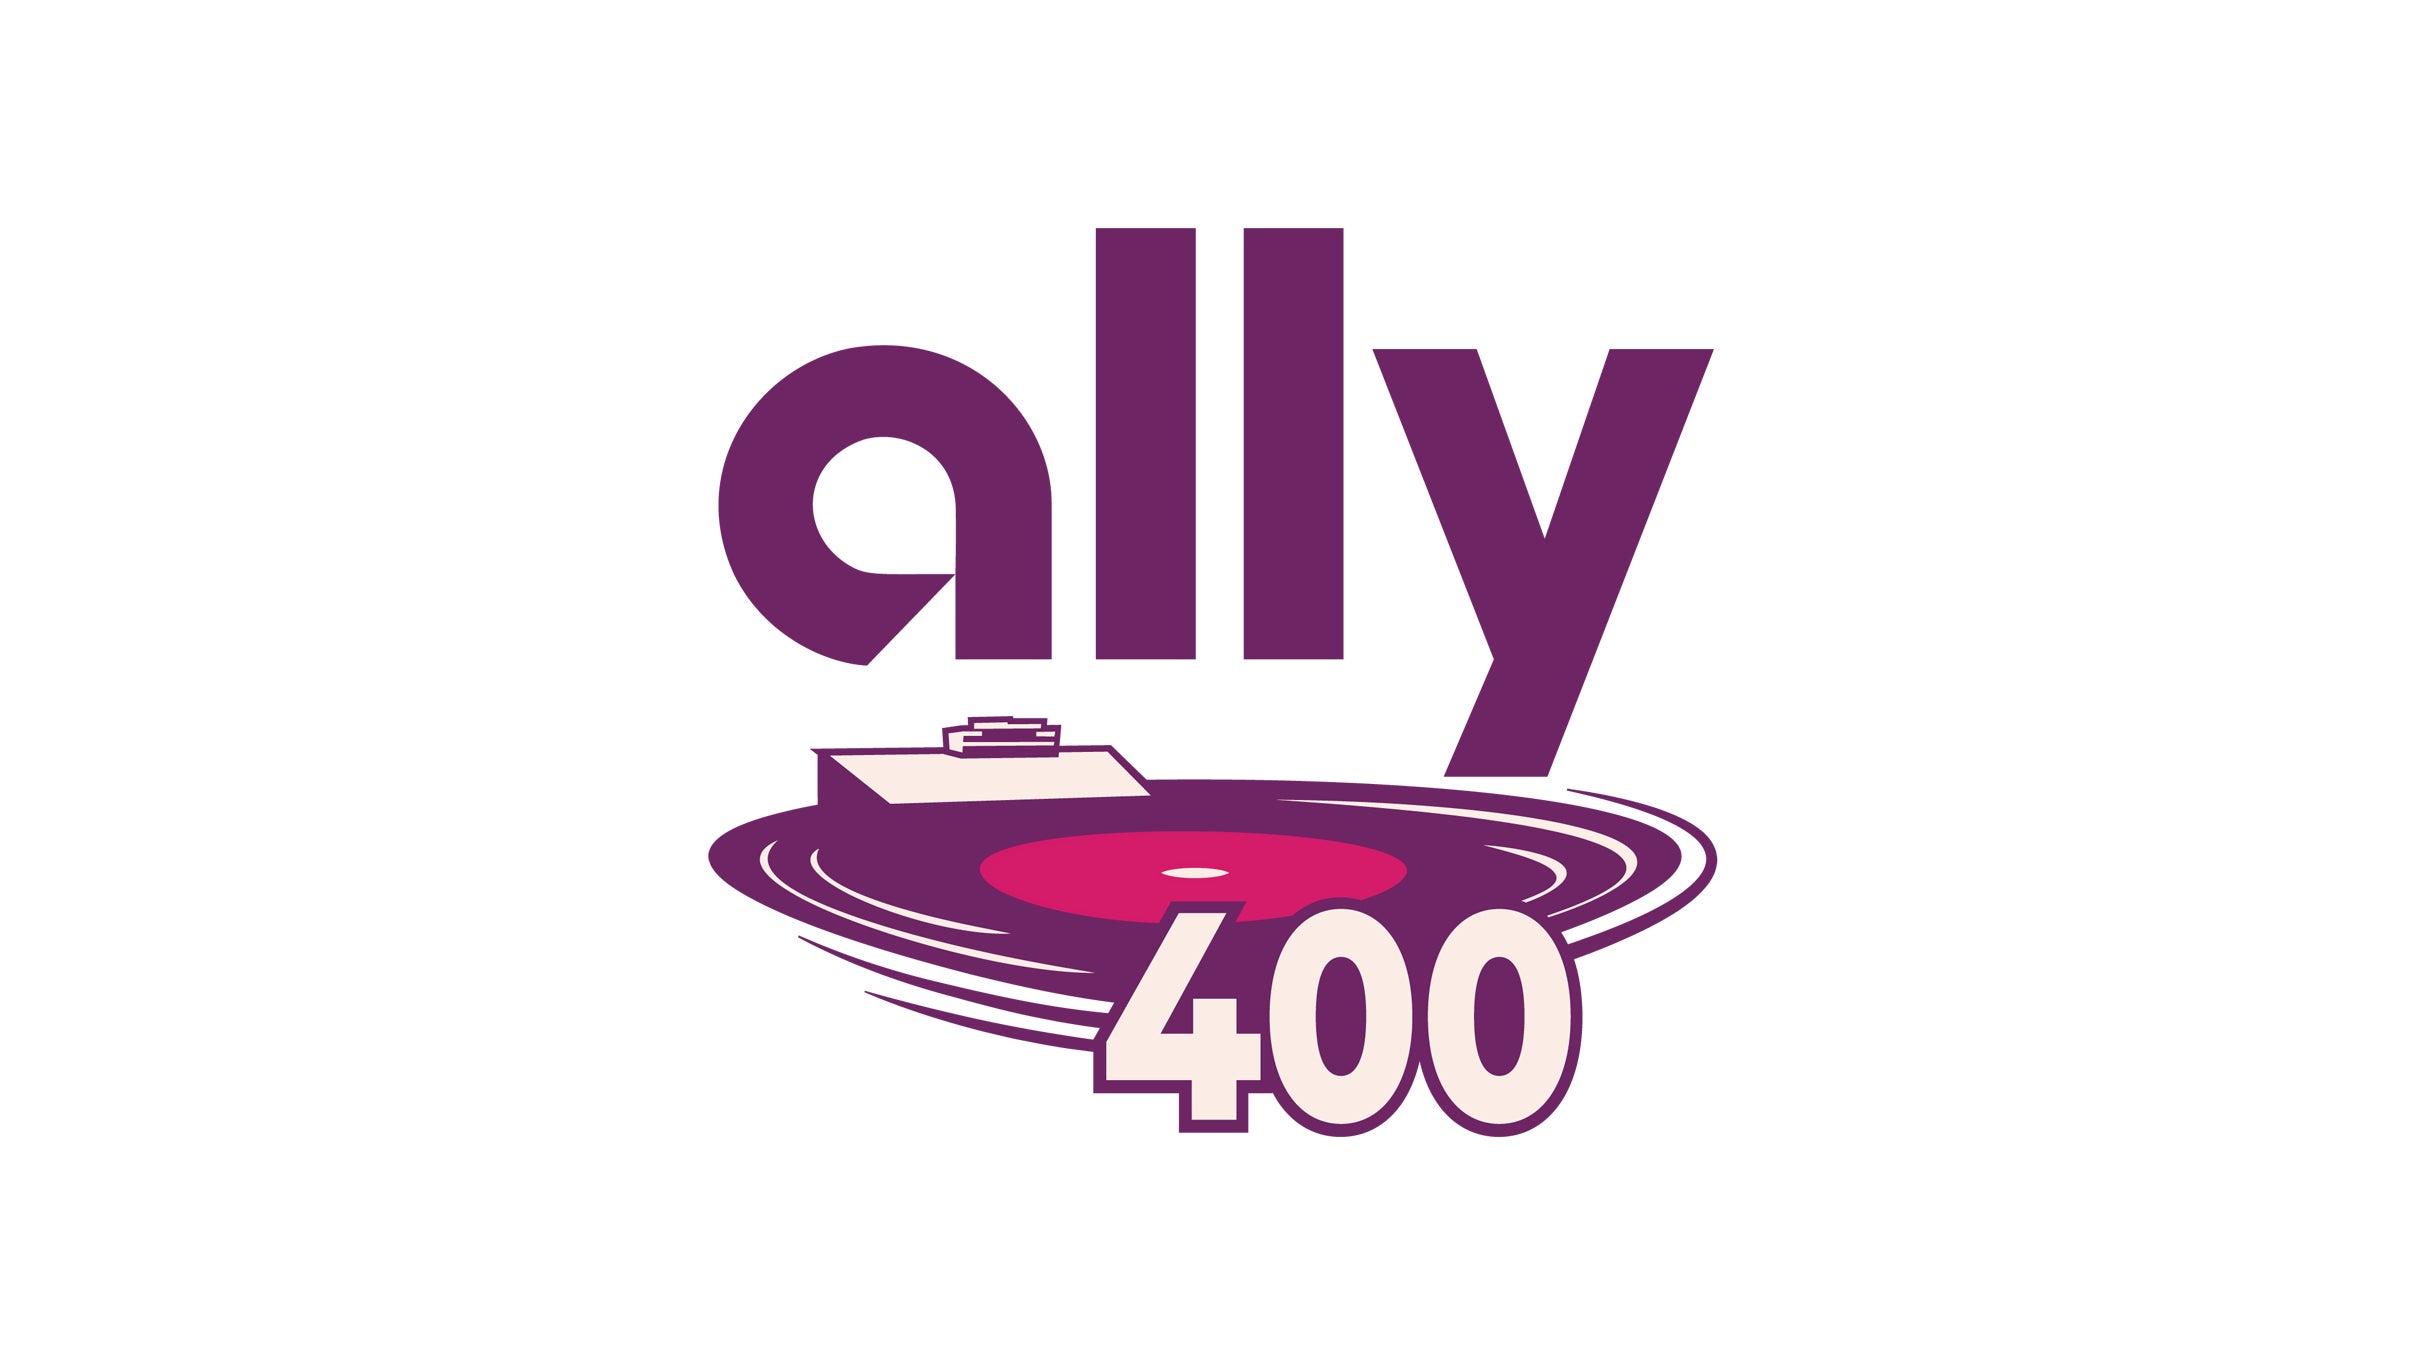 Ally 400 at Nashville Superspeedway